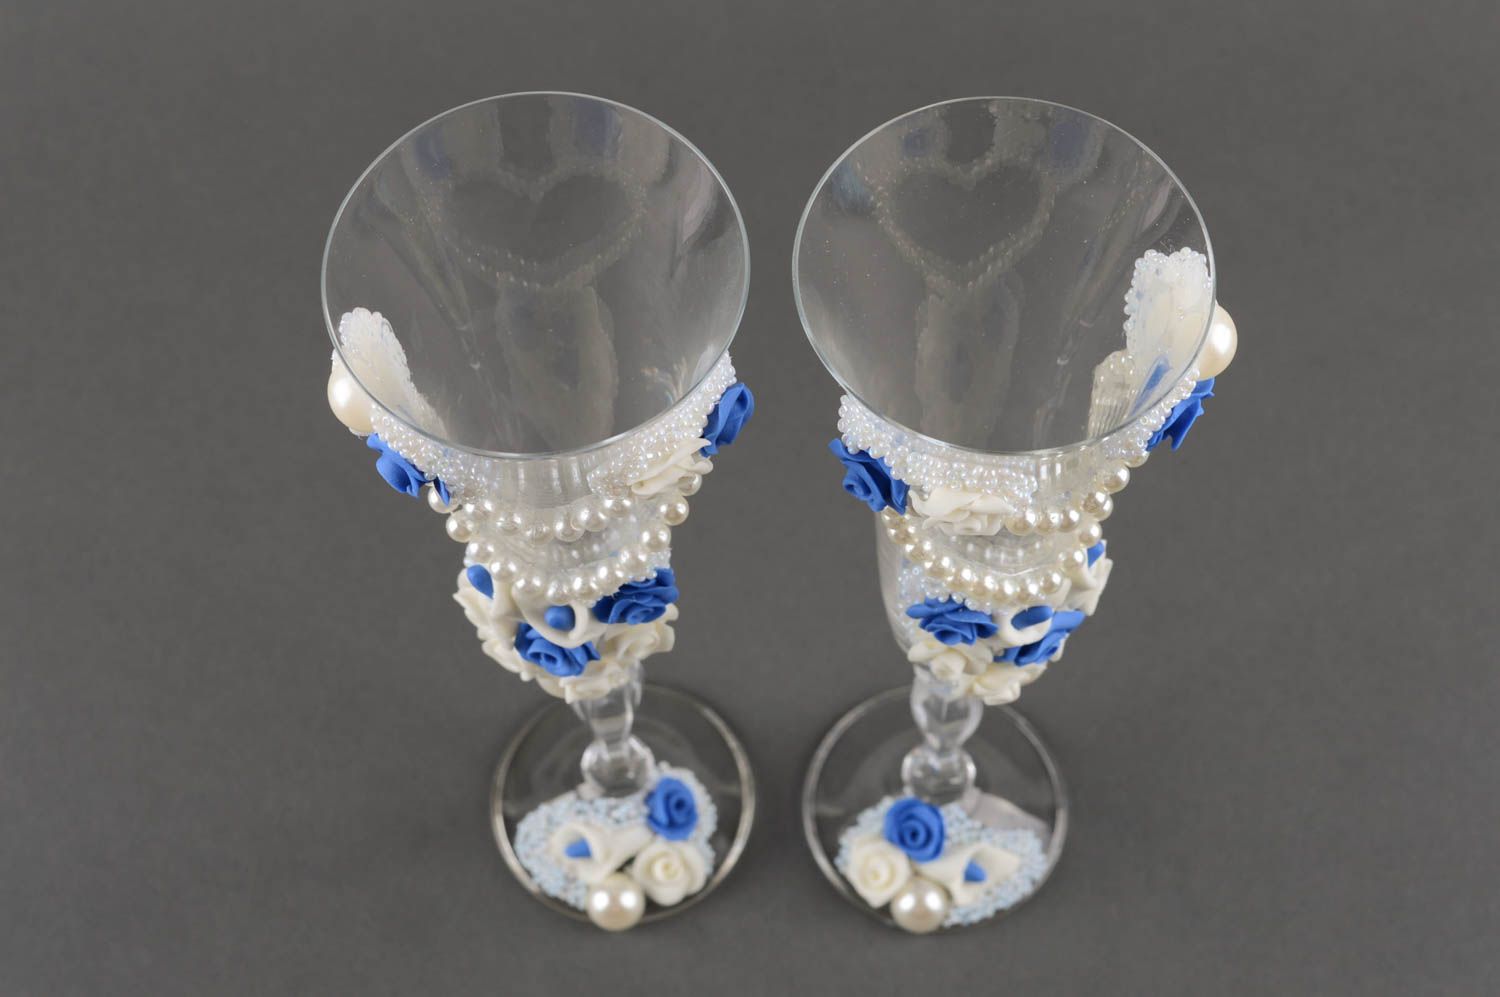 Wedding champagne glasses handmade decorative wine glasses wedding gift ideas photo 5